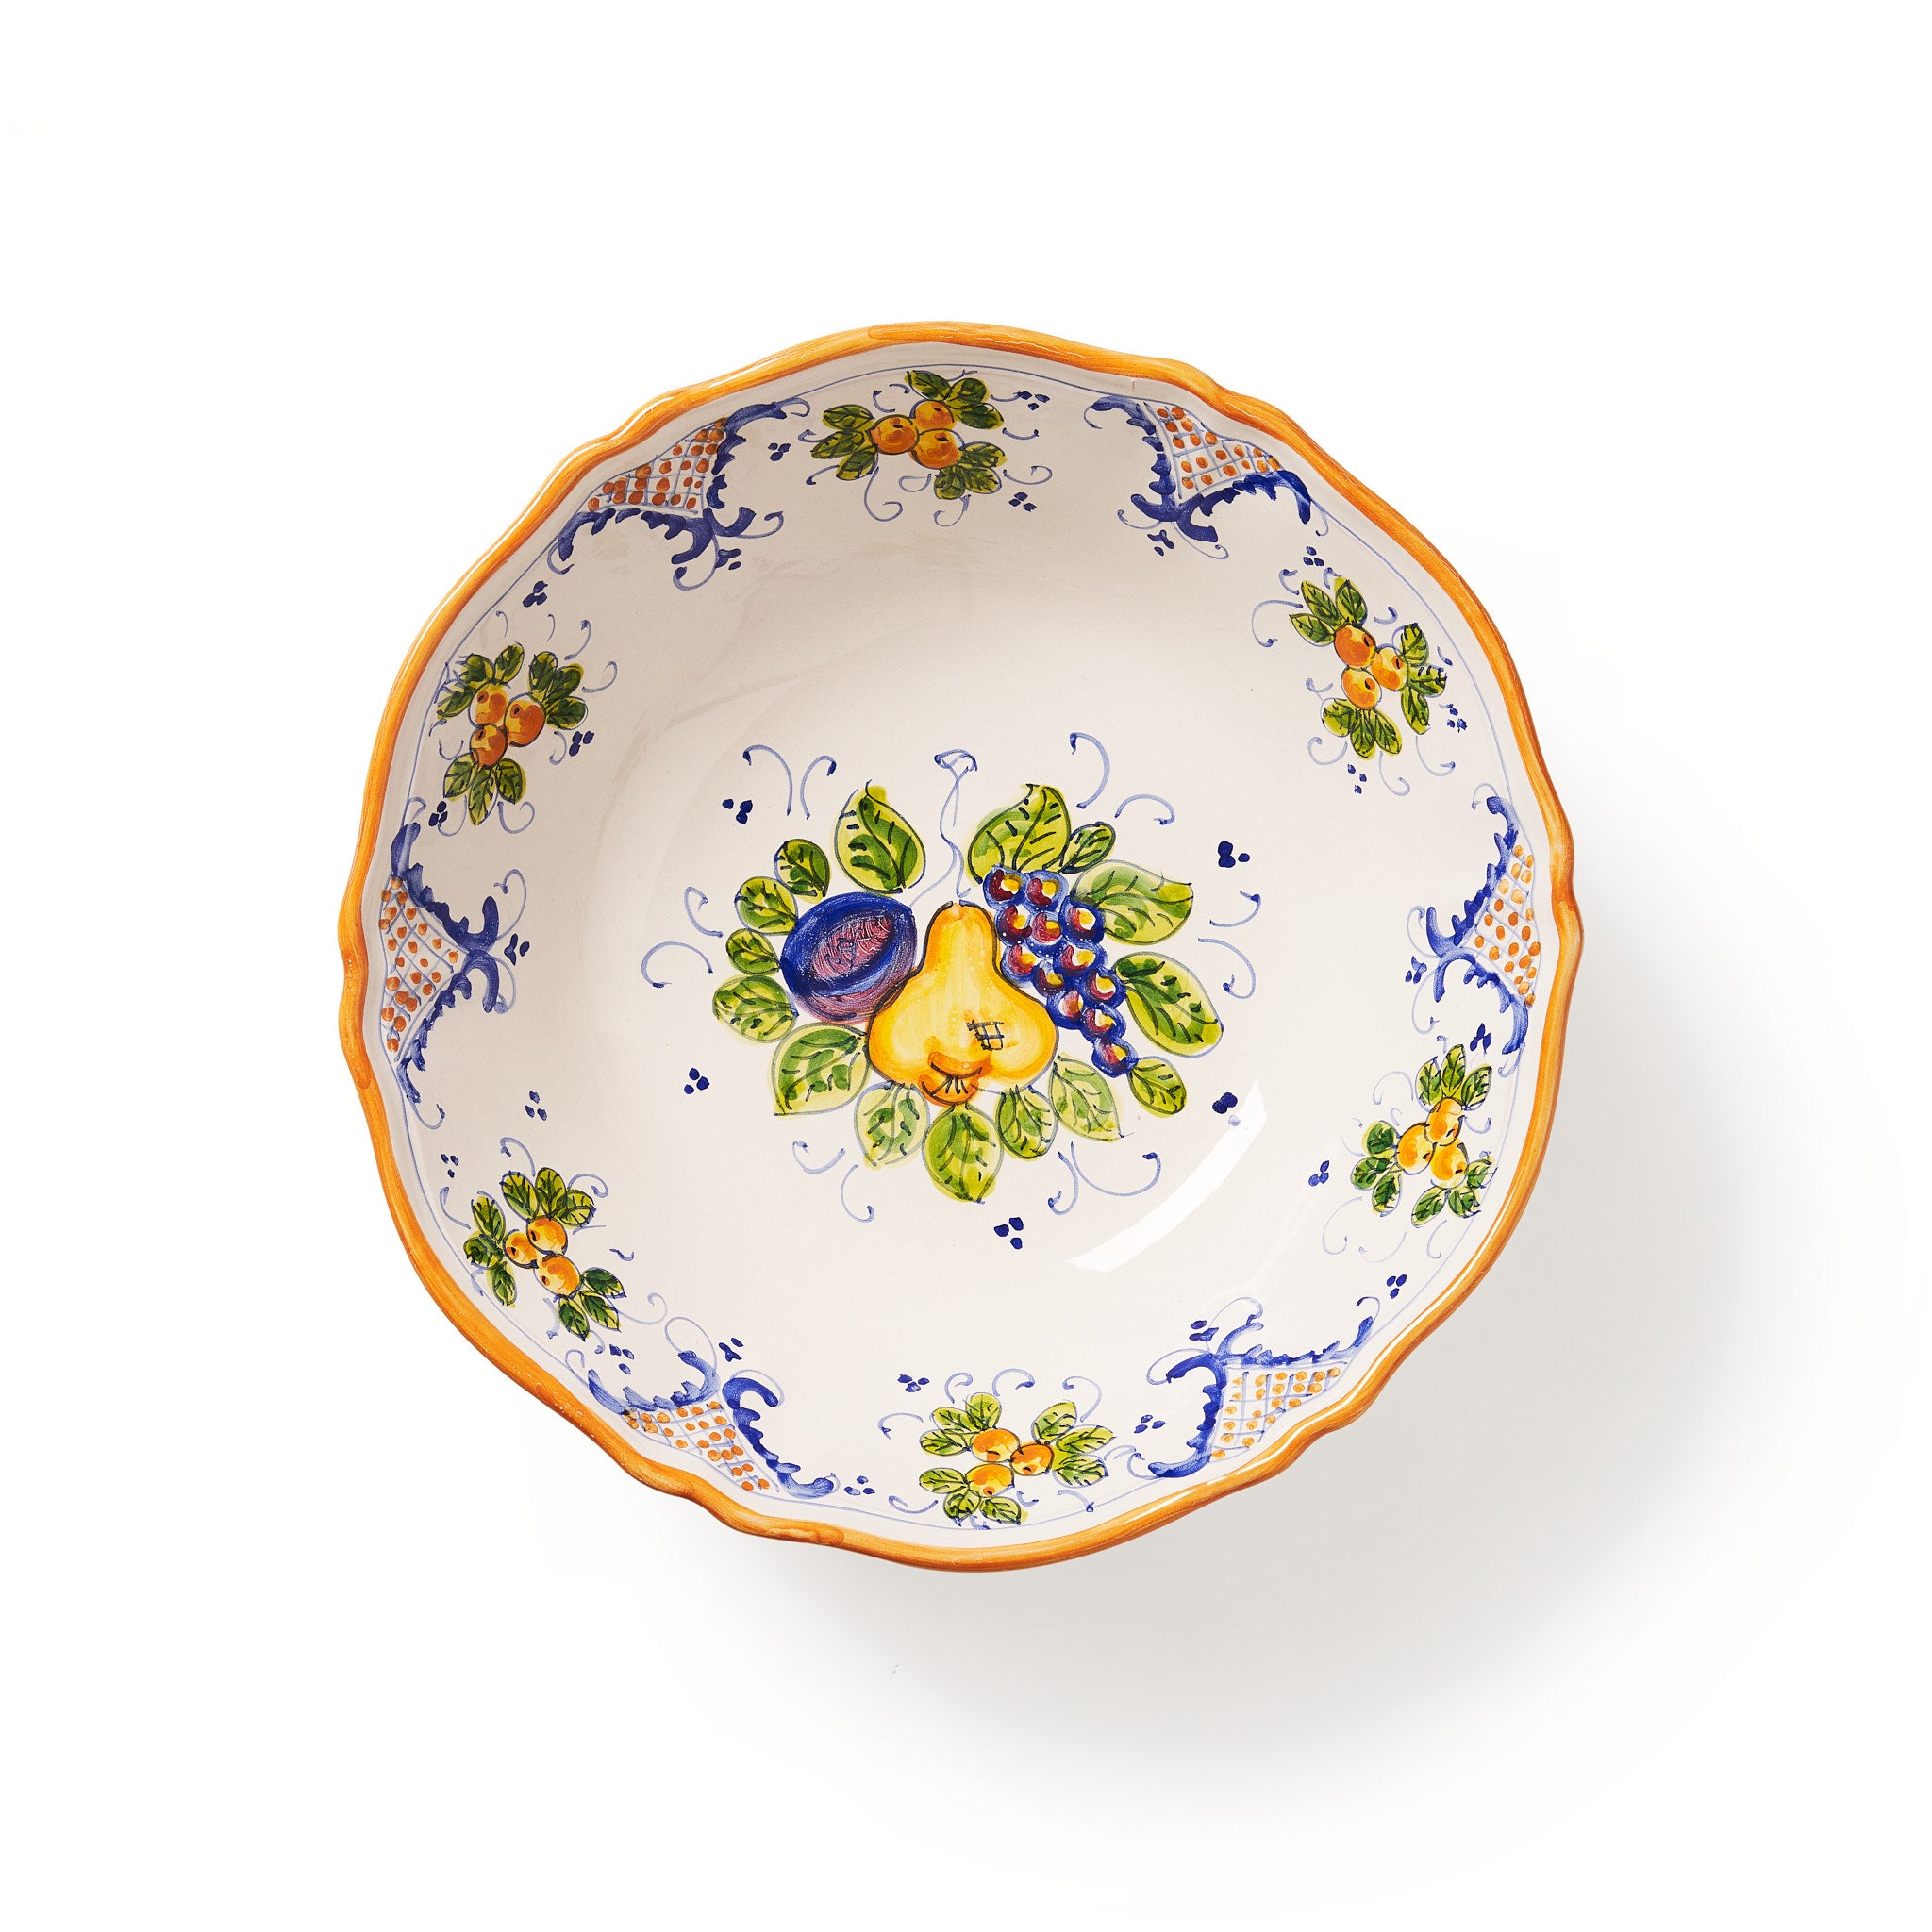 sbigoli-ceramics-pottery-salad-bowl-scalloped-autunno-autumn